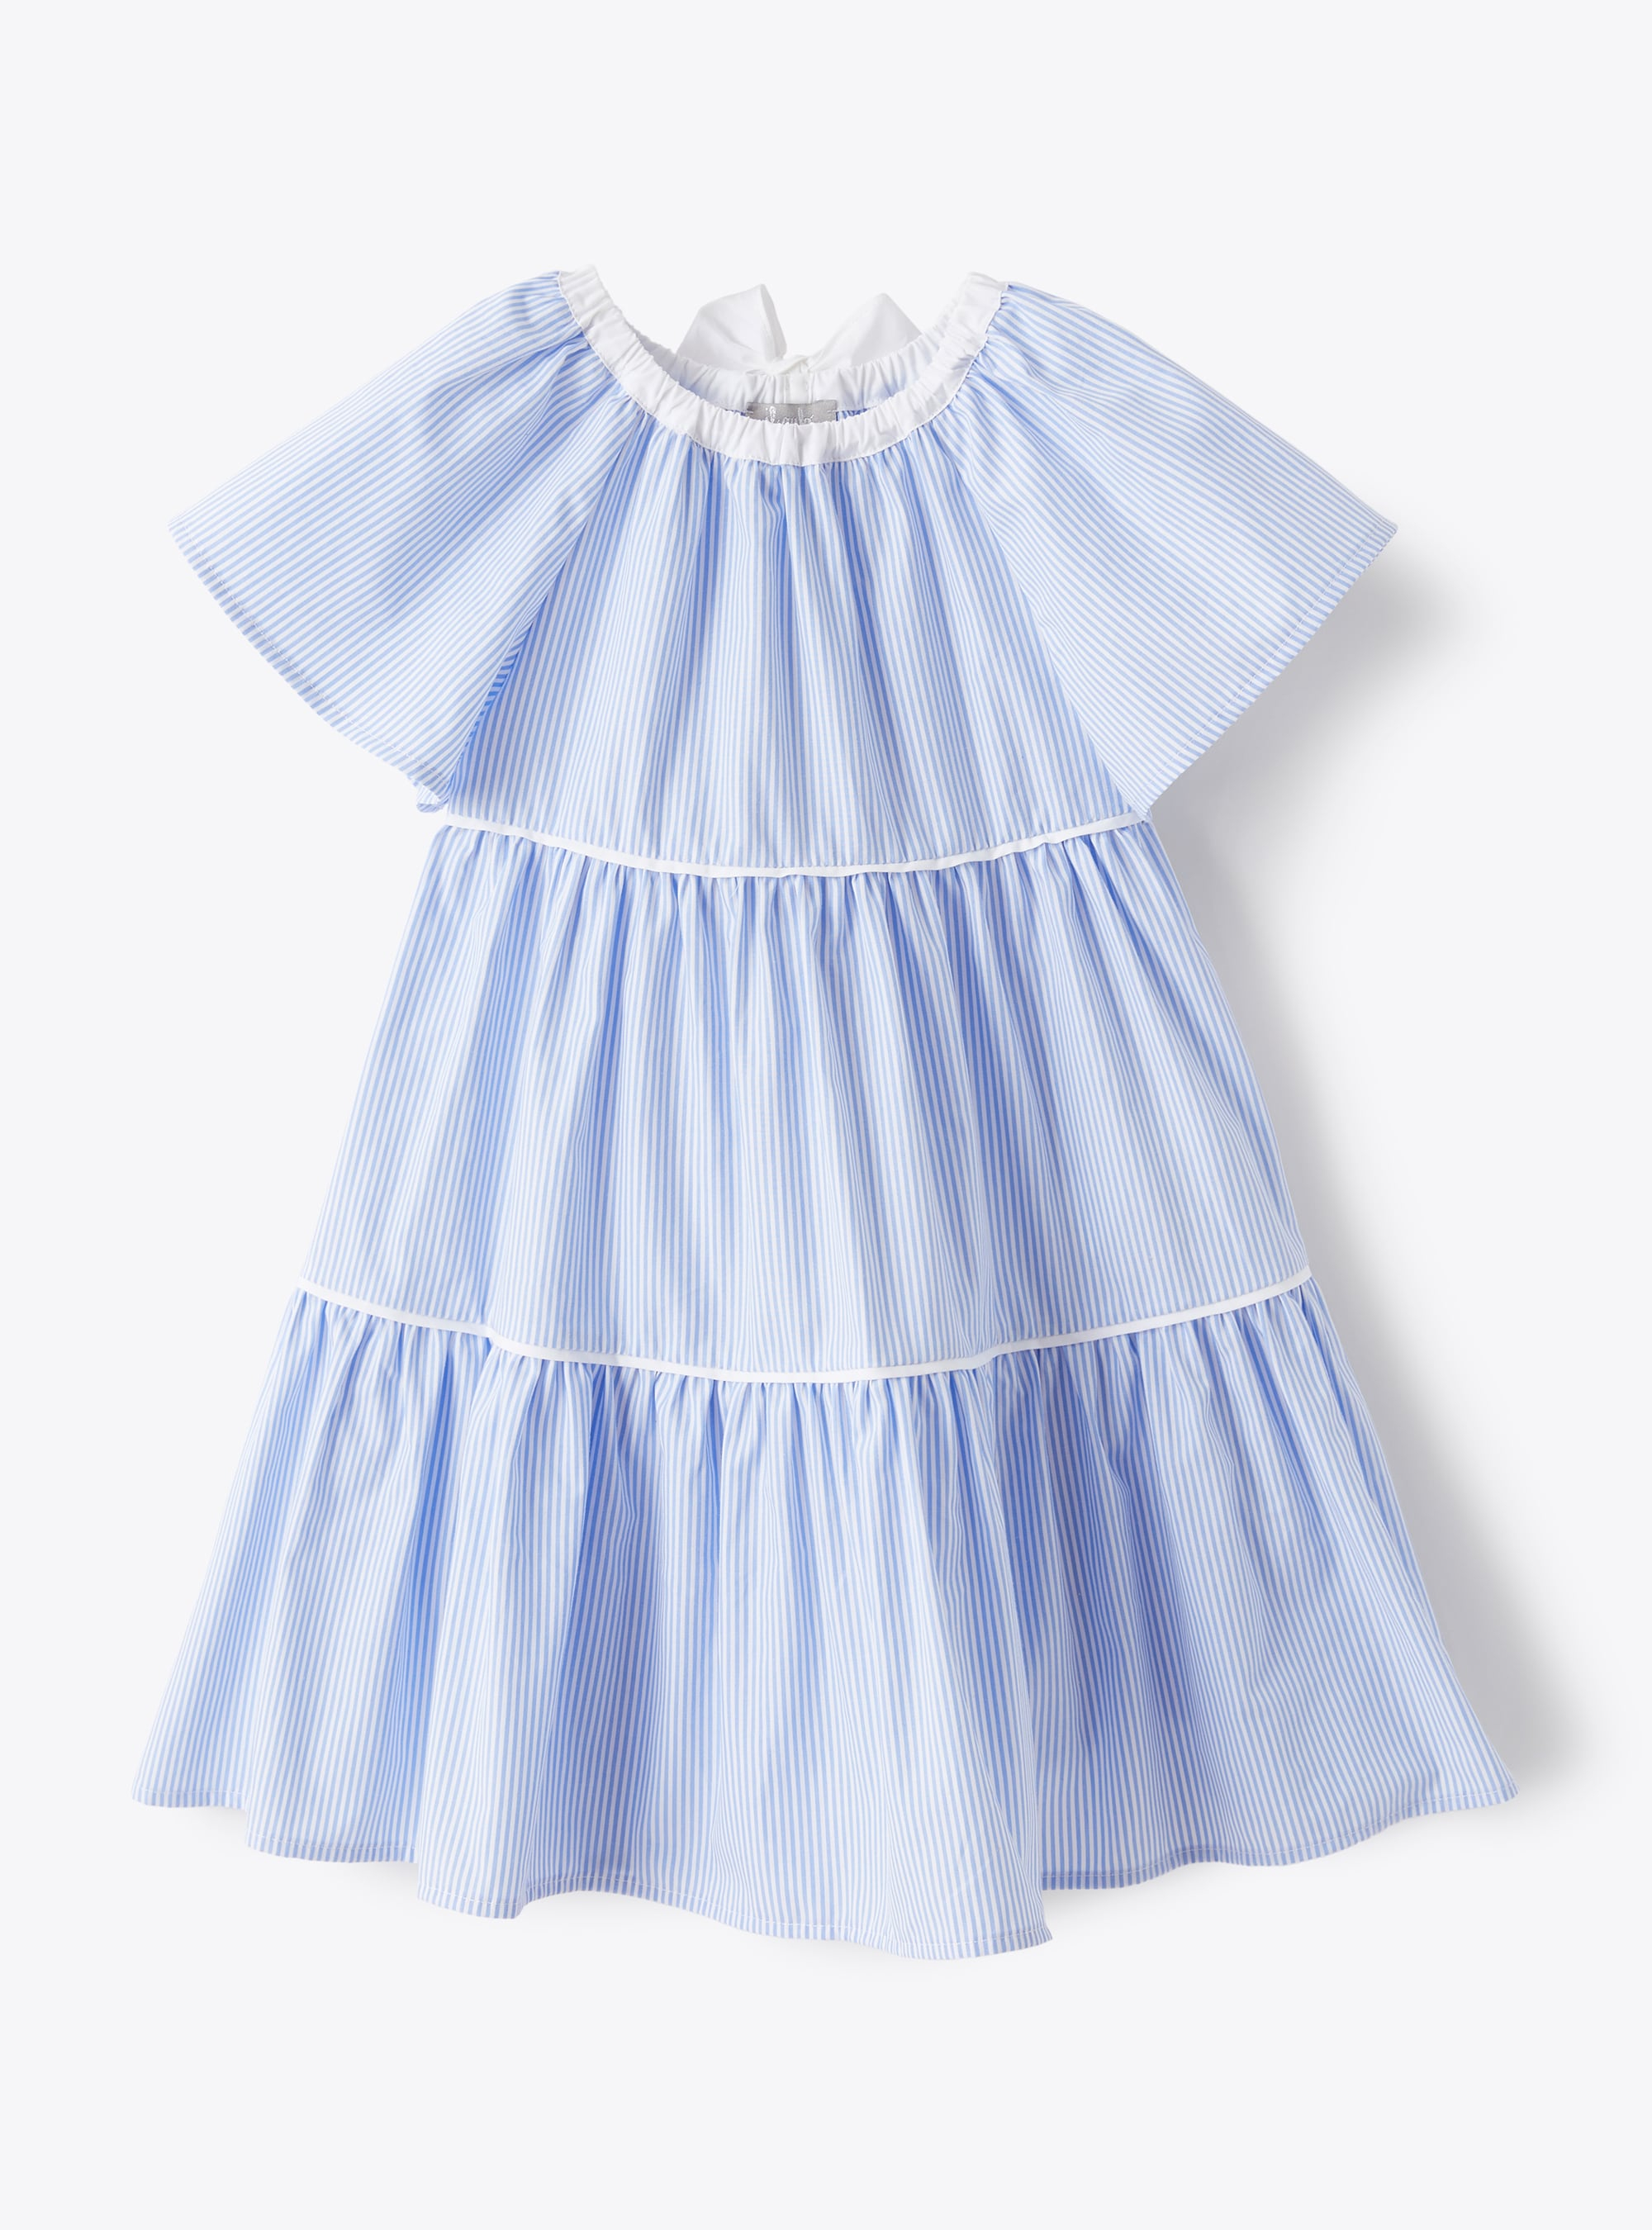 Tiered dress in a light-blue stripe - Dresses - Il Gufo